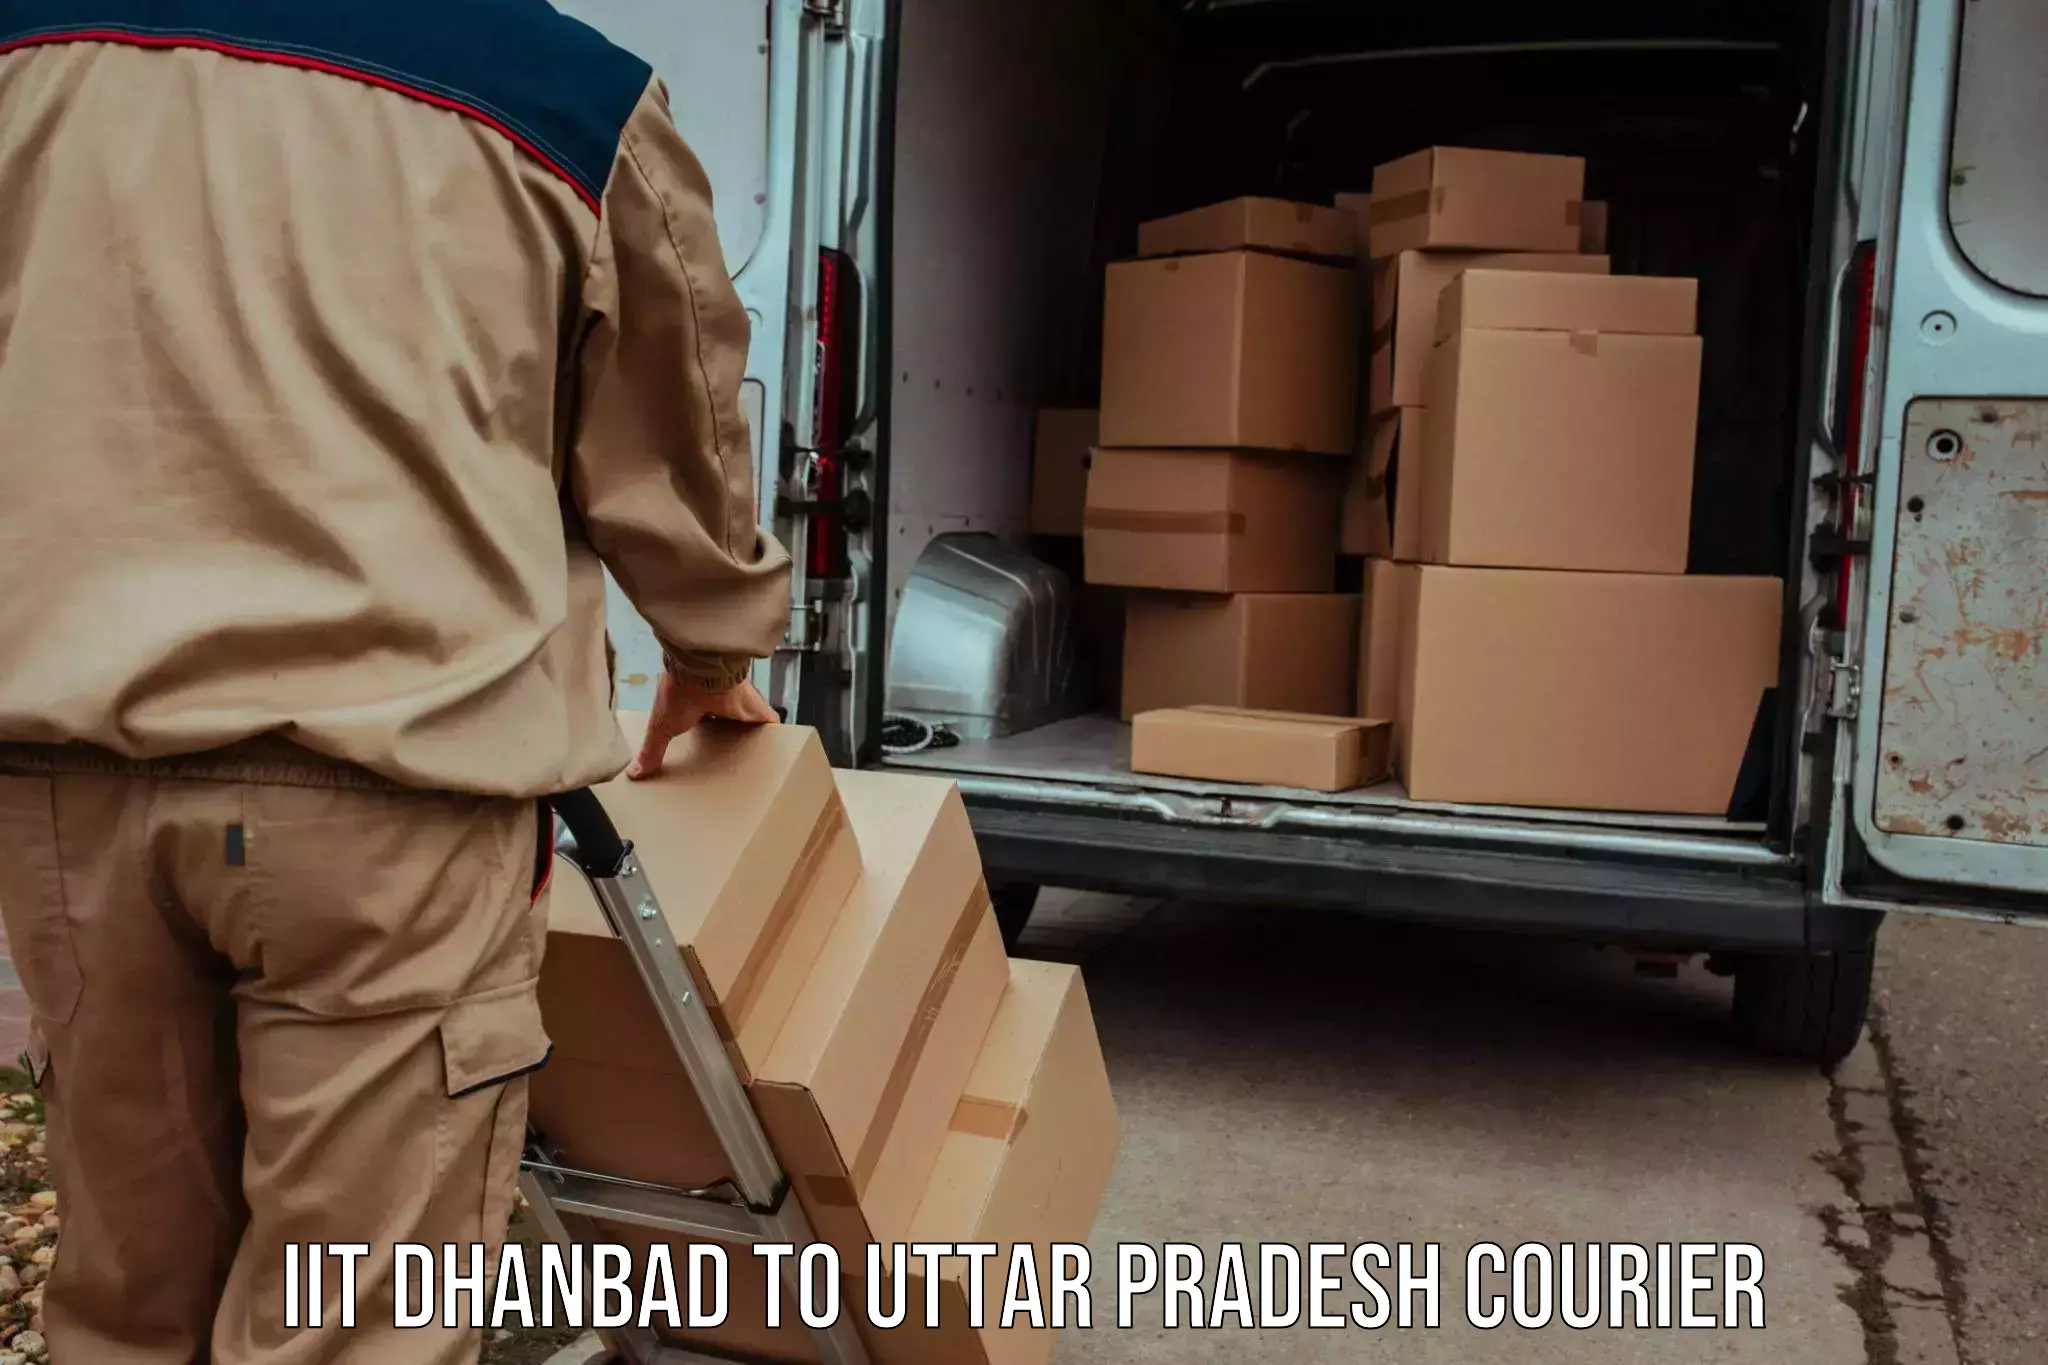 On-call courier service IIT Dhanbad to Gautam Buddha Nagar